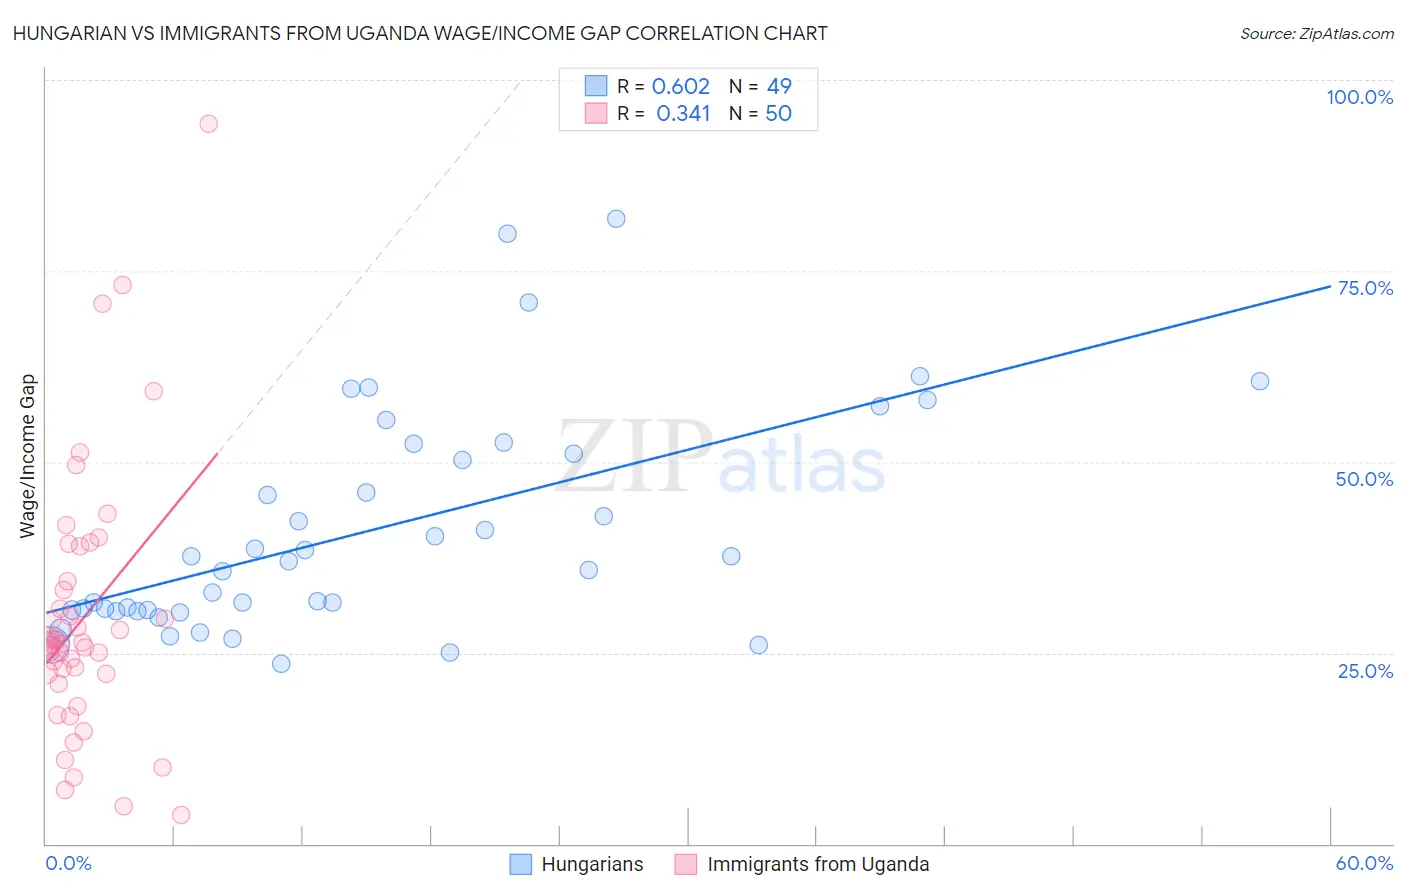 Hungarian vs Immigrants from Uganda Wage/Income Gap